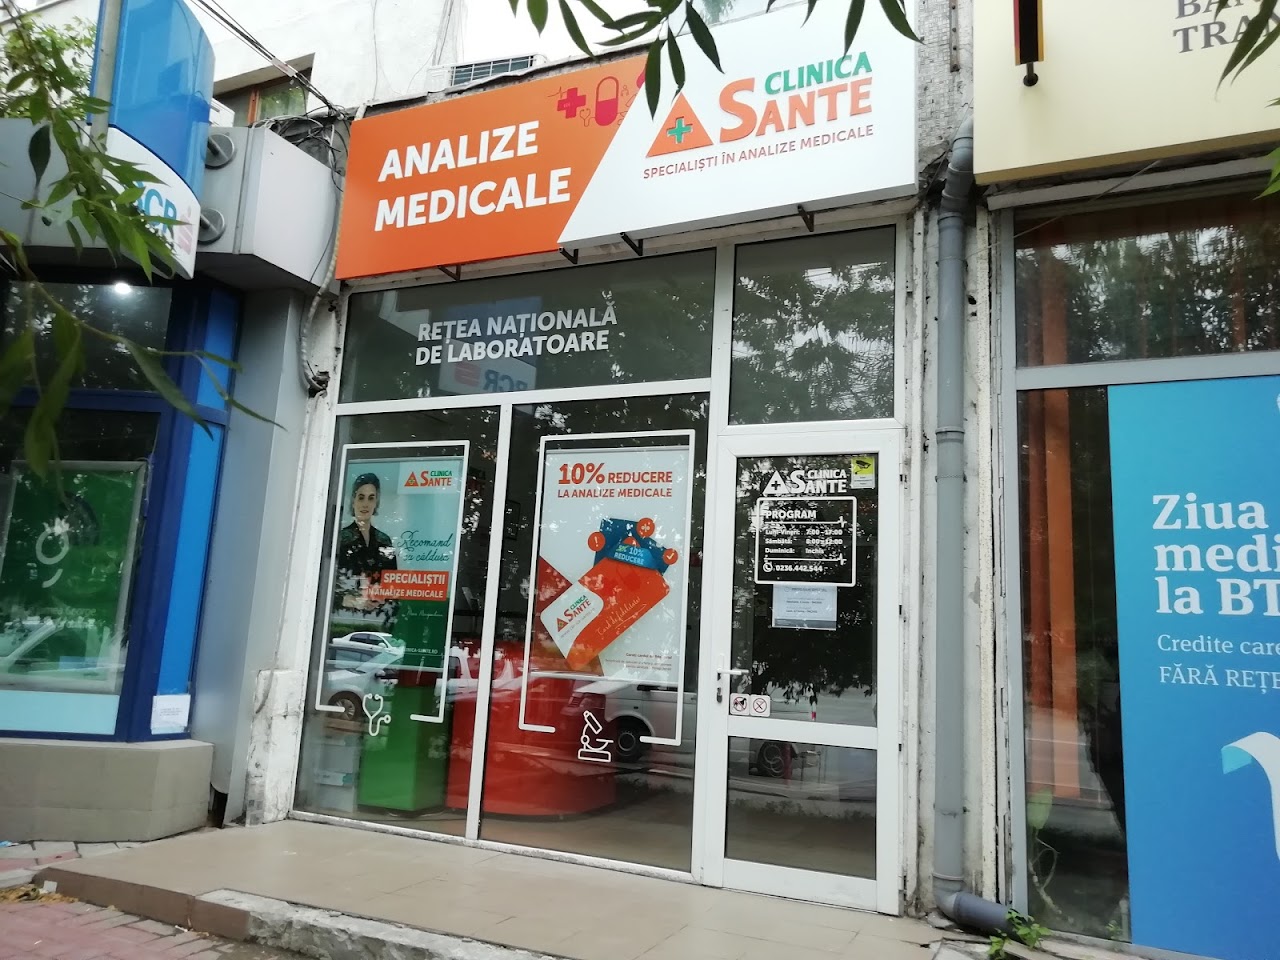 Photo of Clinica Sante Galați COVID Testing at Strada Brăilei, Galați, Romania